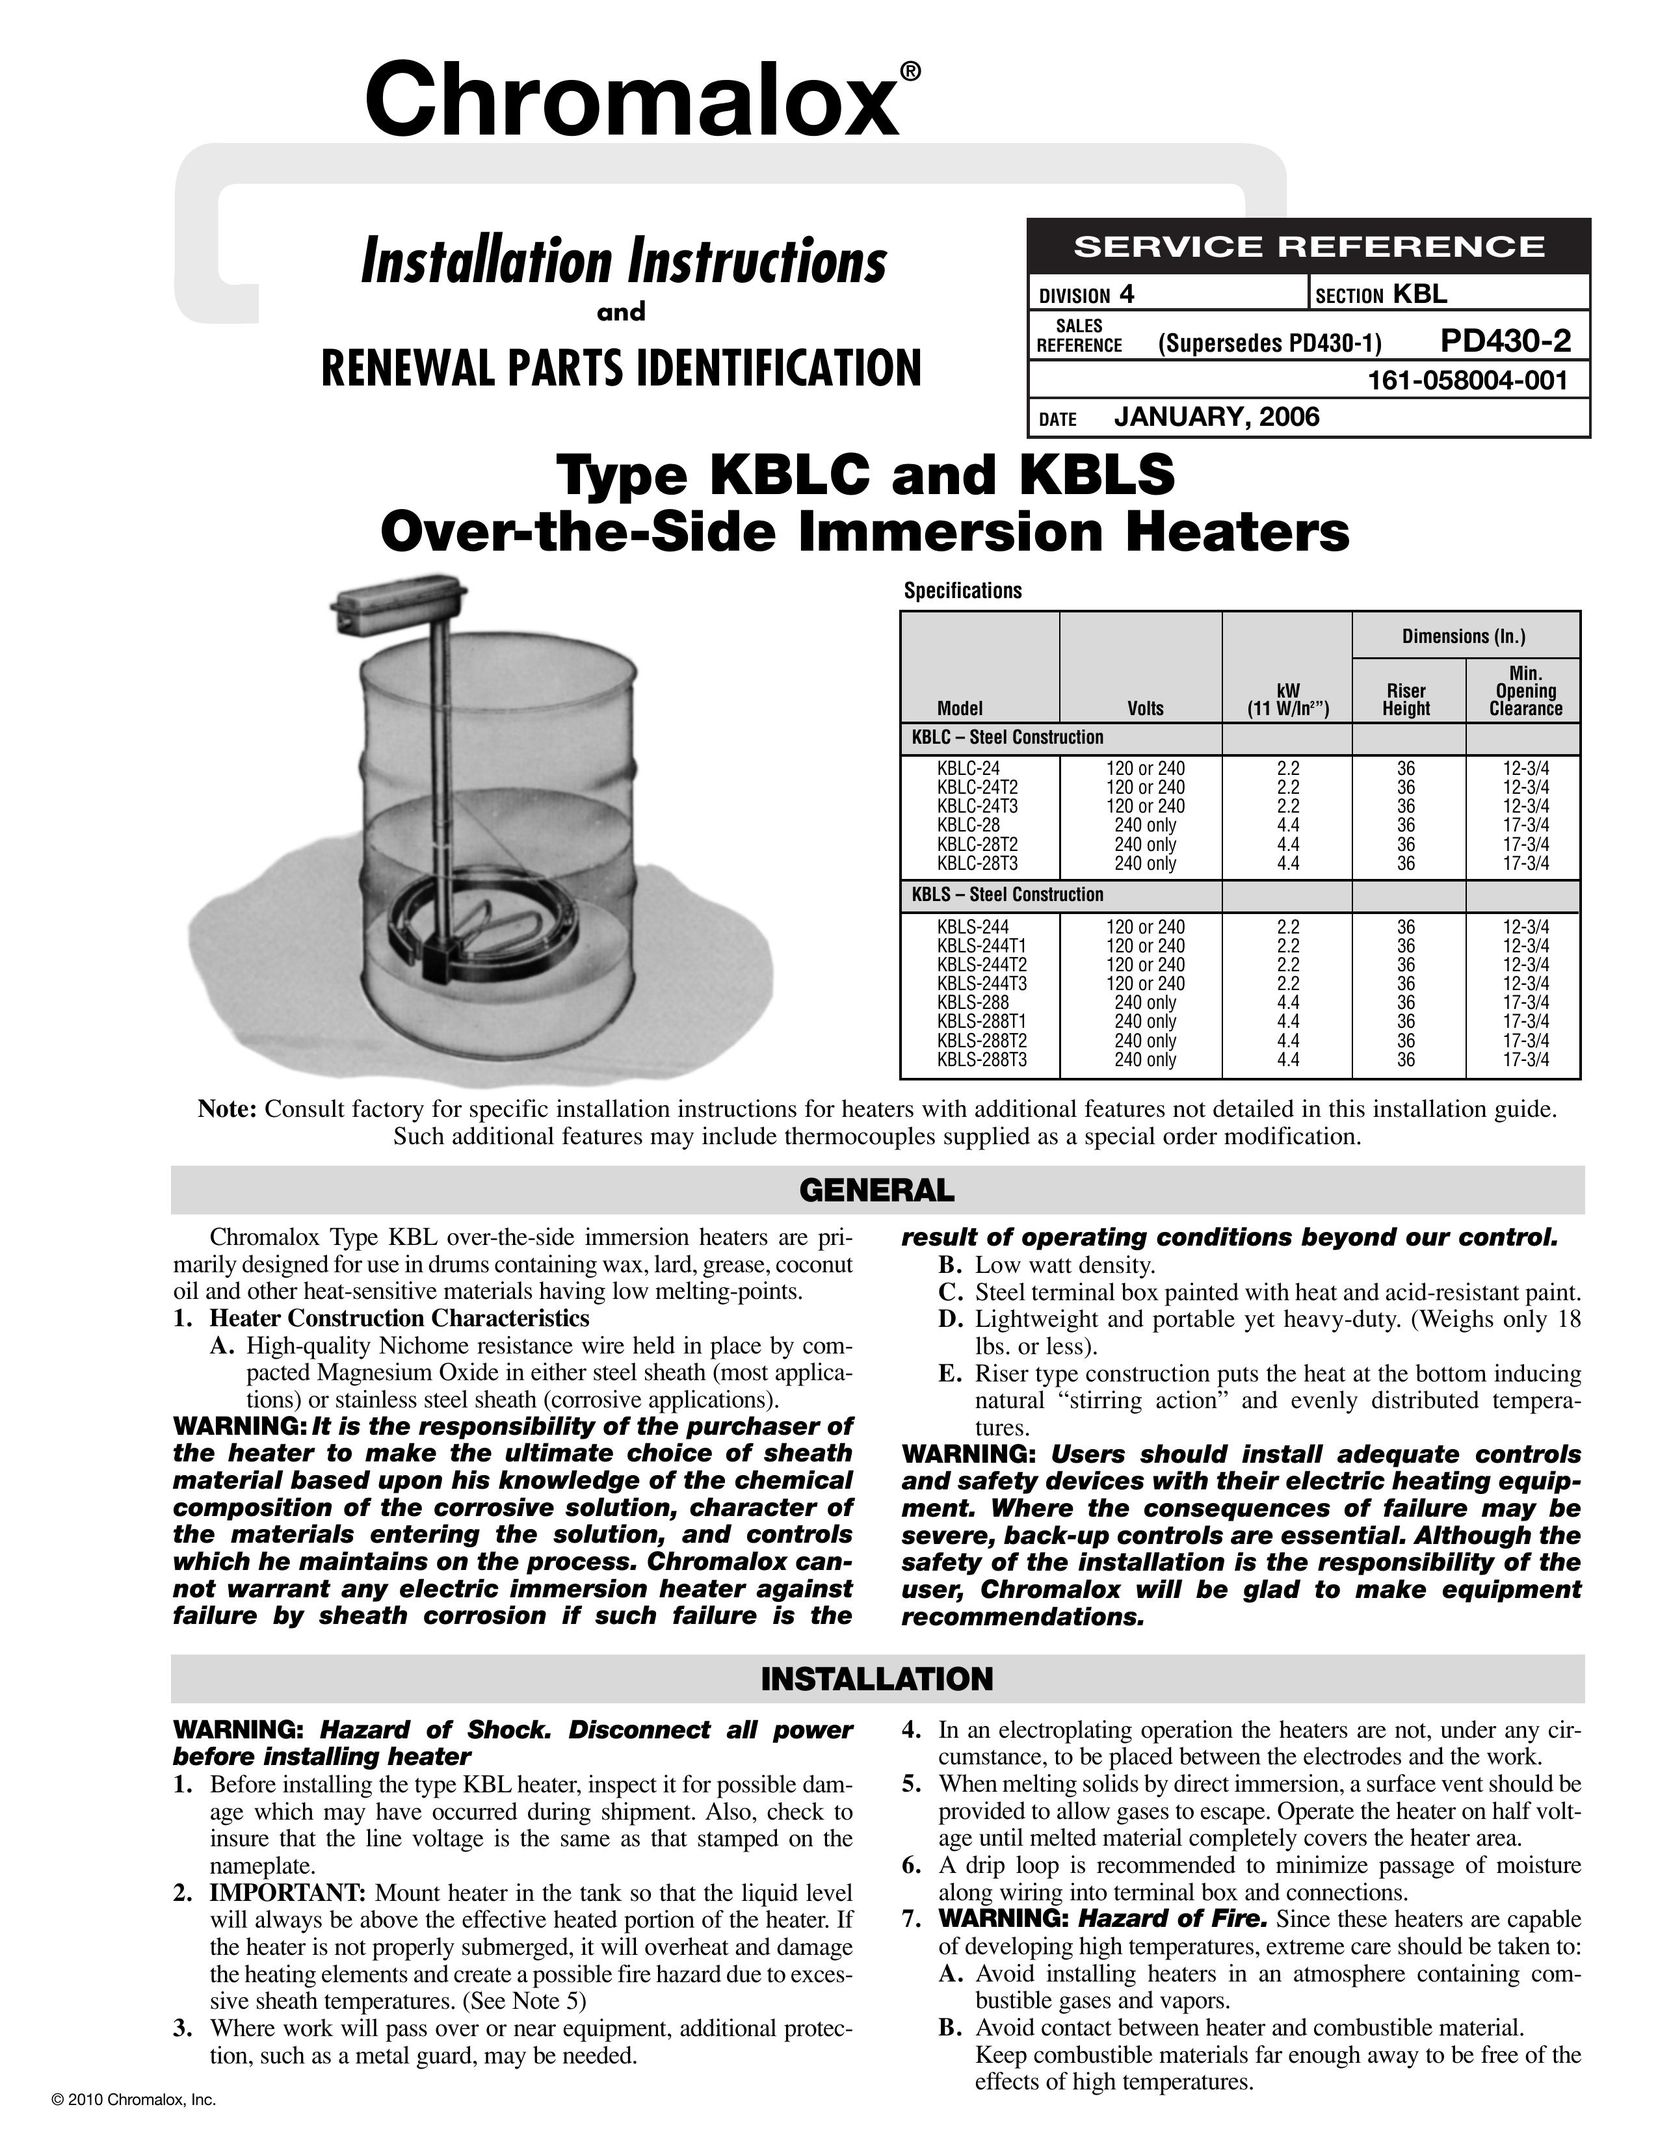 Chromalox KBLC Electric Heater User Manual